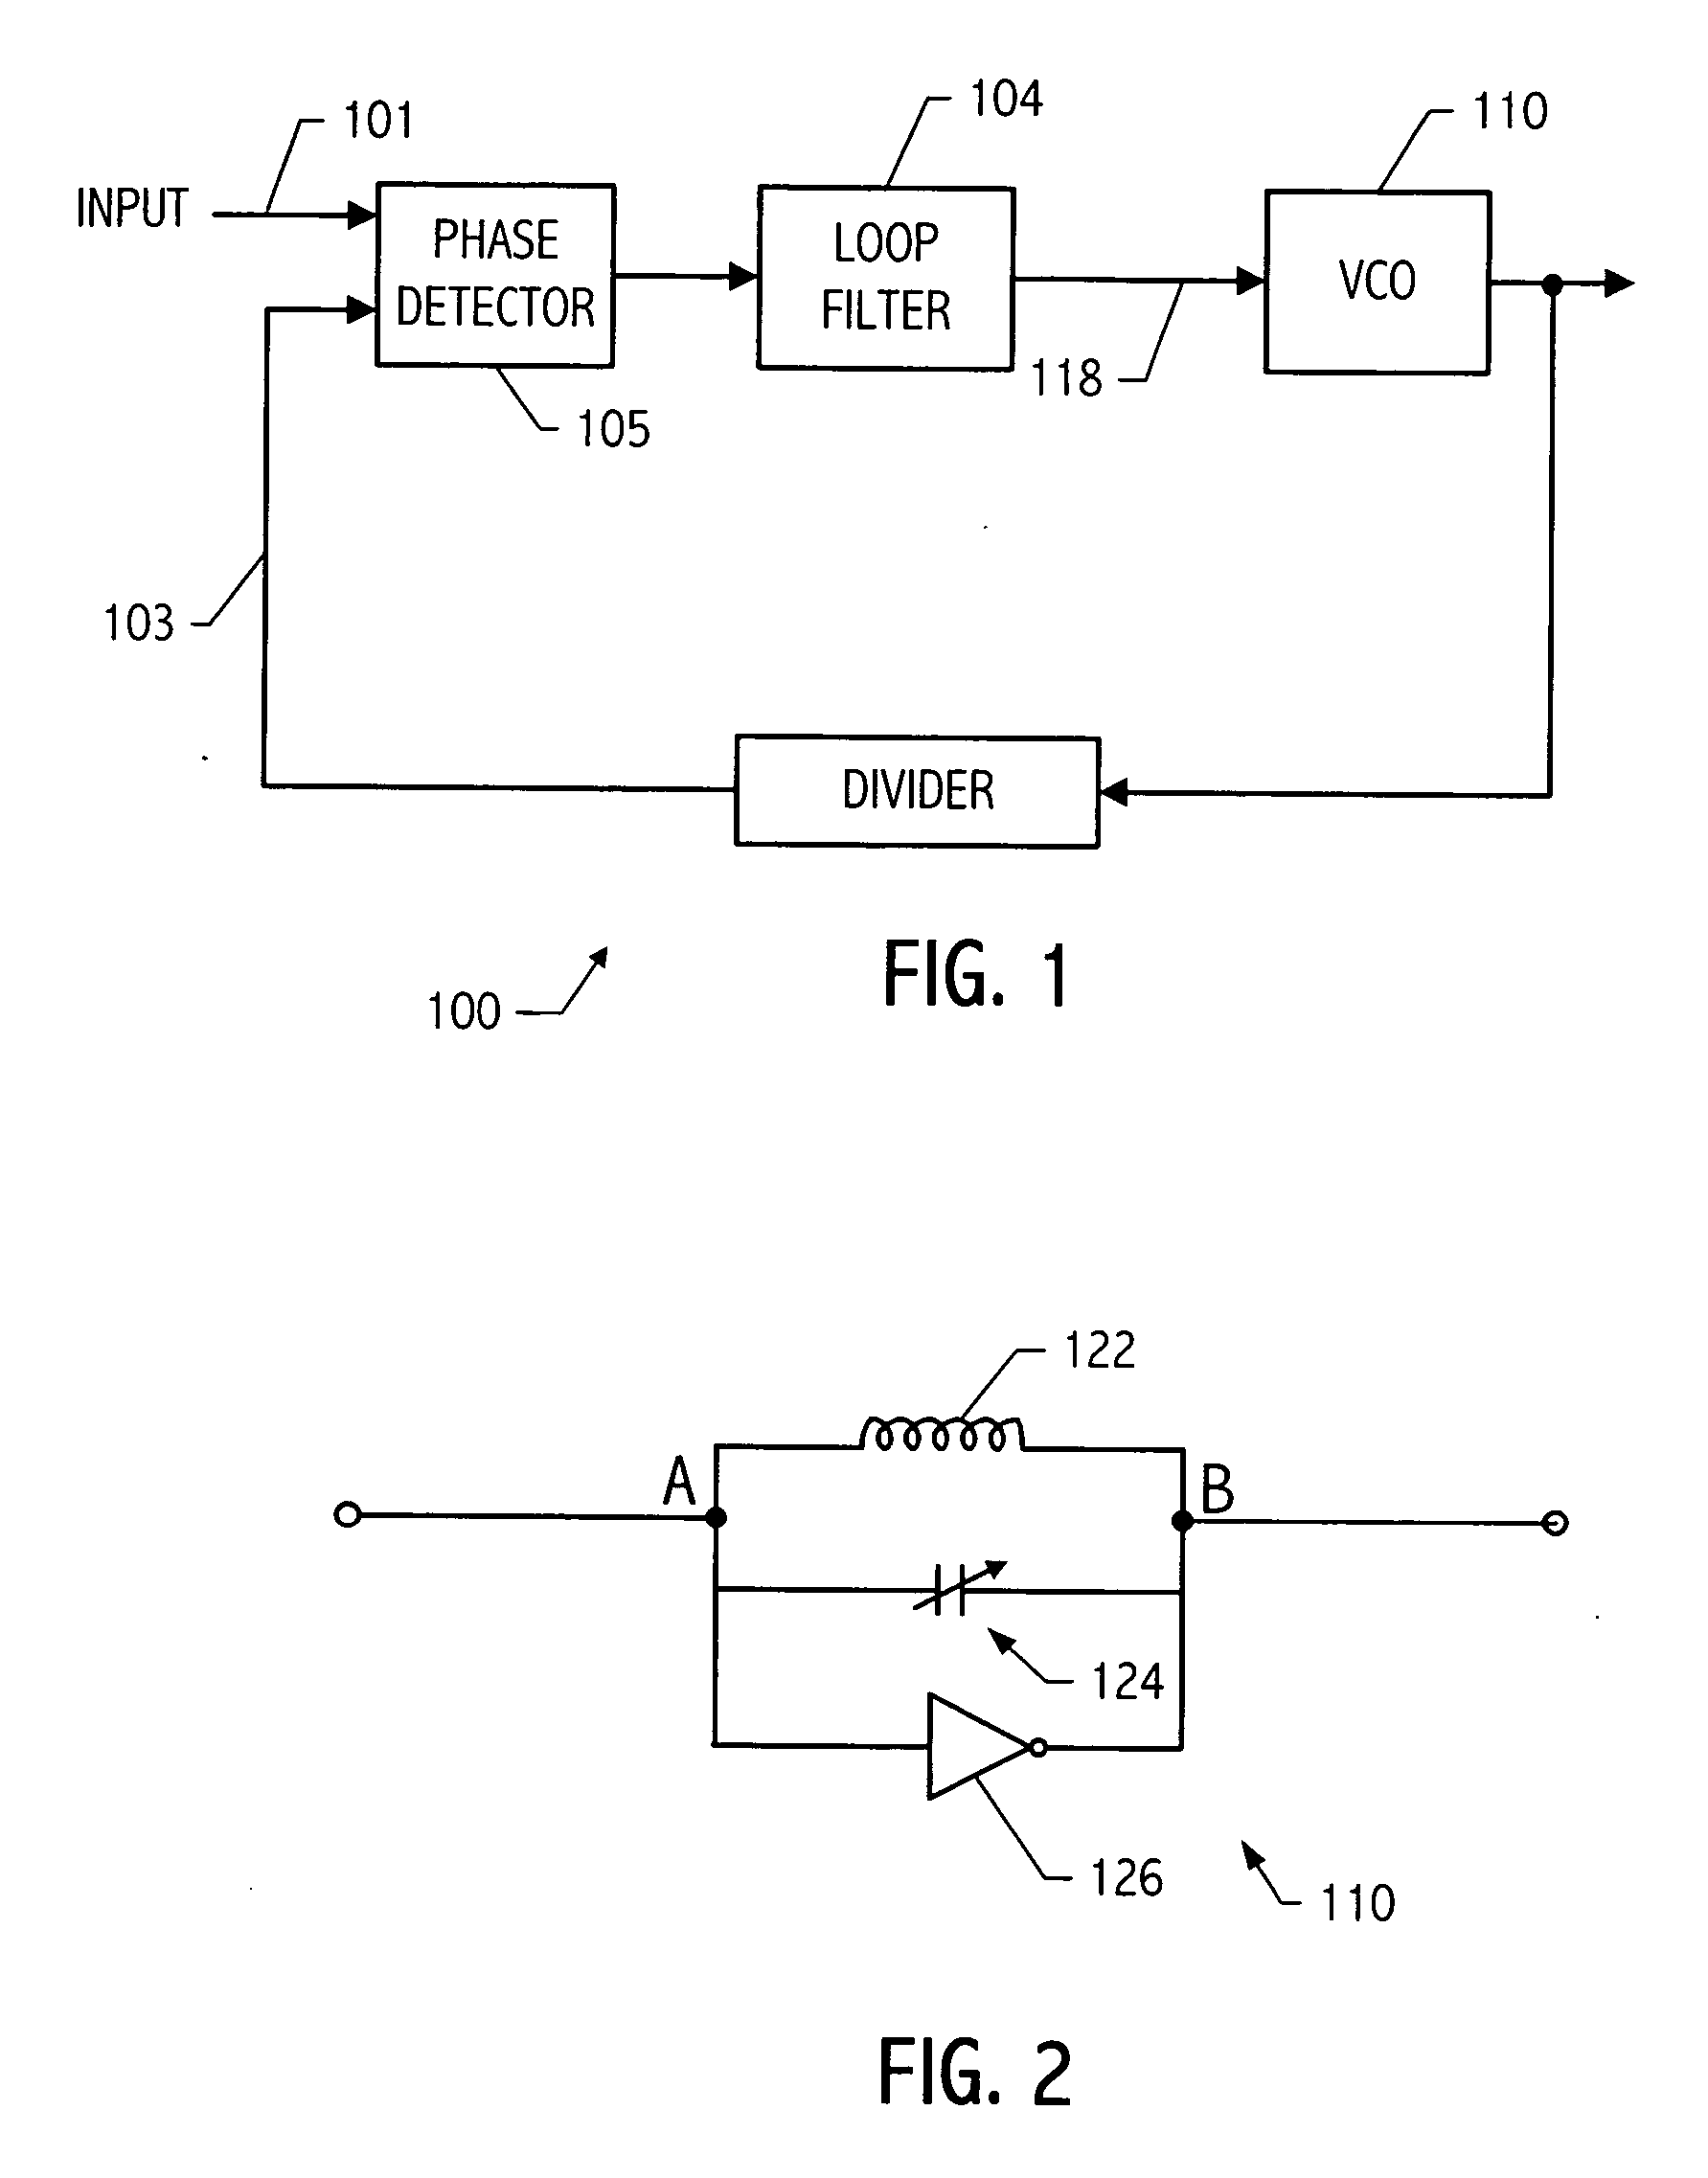 Push compensation in an oscillator